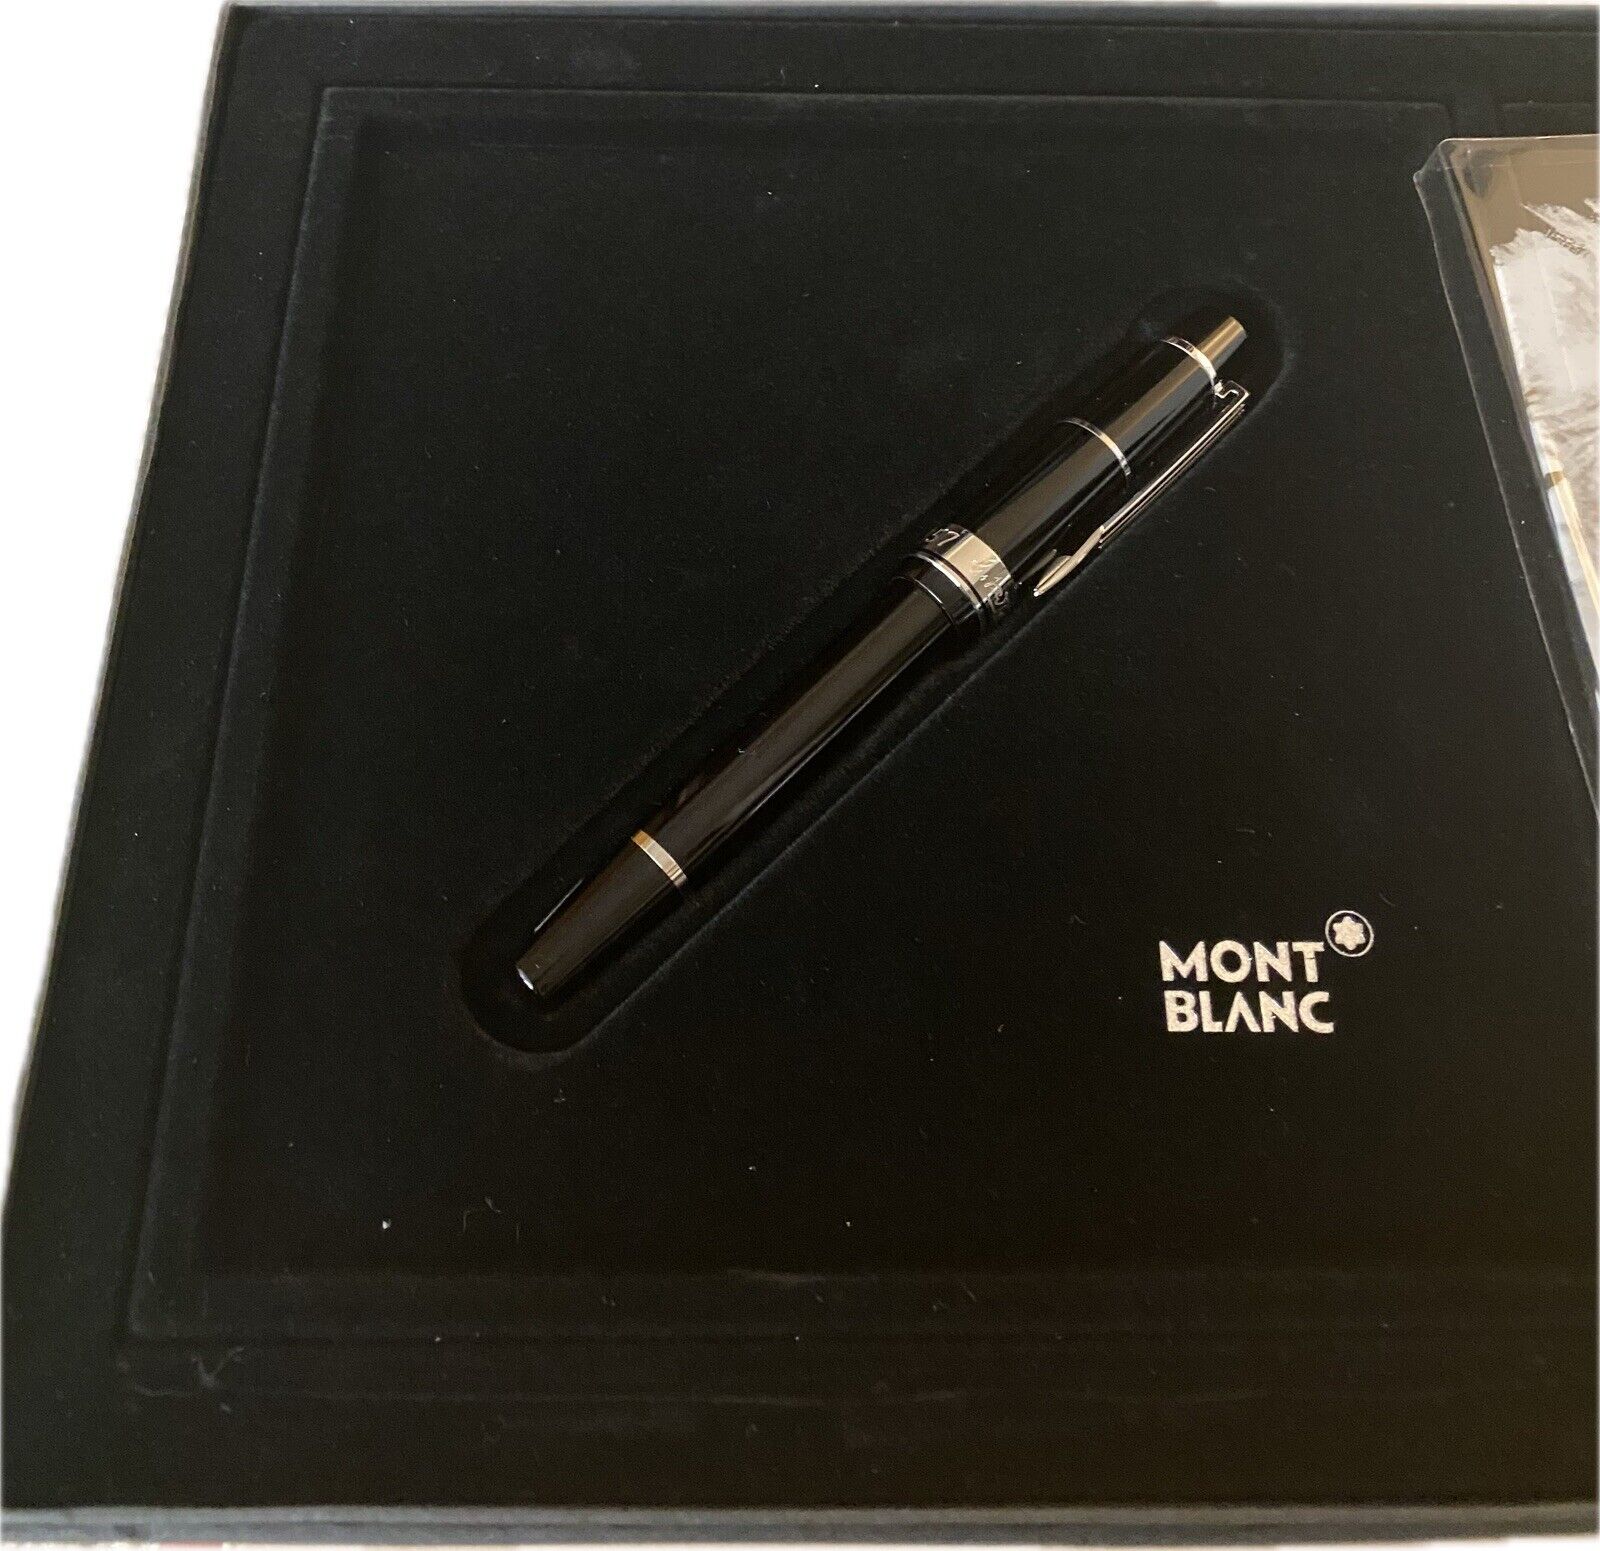 Montblanc Arturo Toscanini Fountain Pen Special Edition 101173